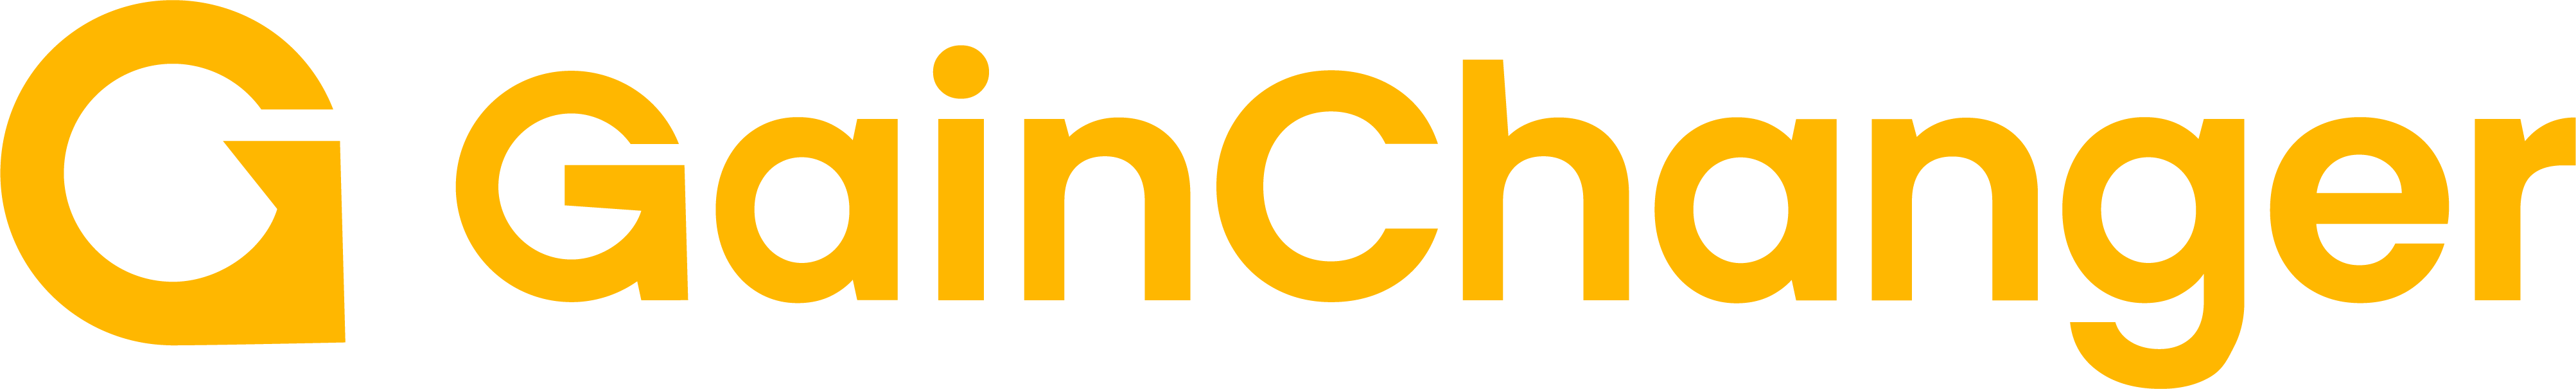 GainChanger logo